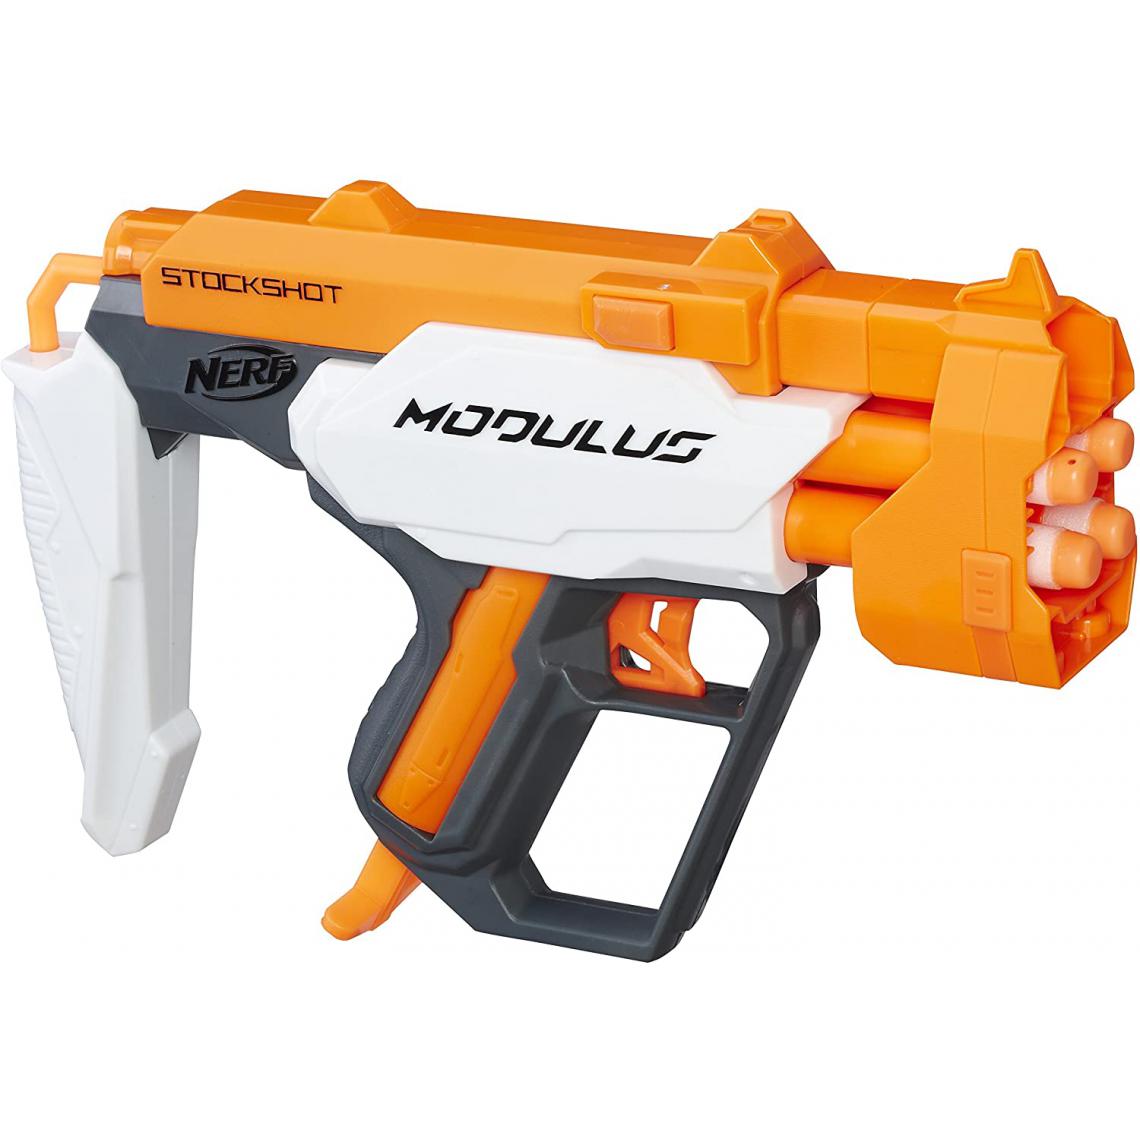 Nerf - pistolet modulus StockShot Blaster orange blanc noir - Jeux d'adresse